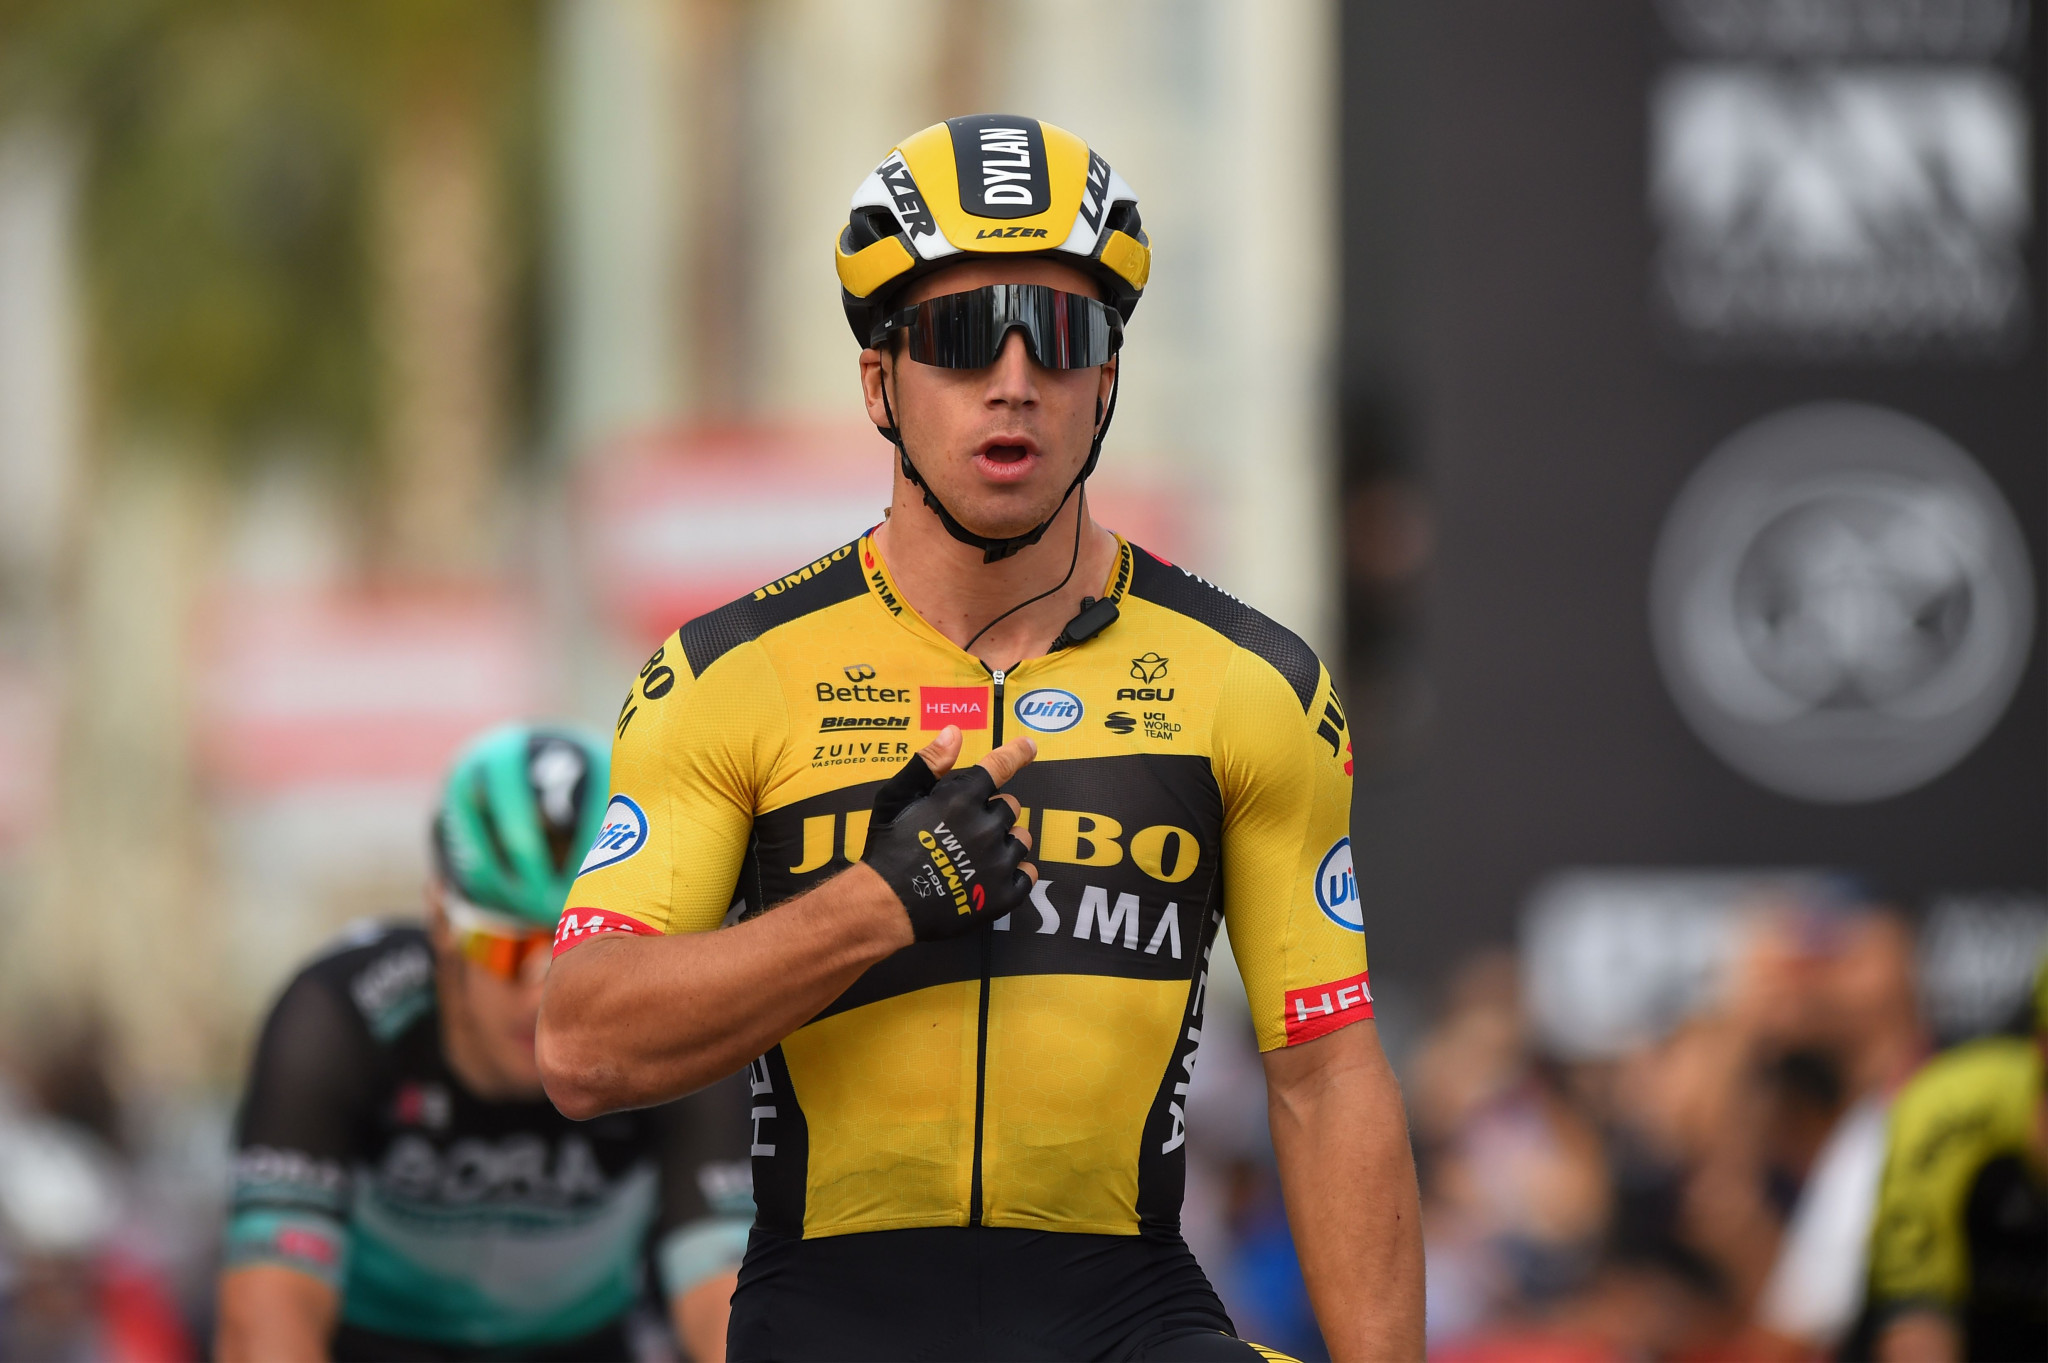 Groenewegen wins fourth stage of UAE Tour as Yates retains lead